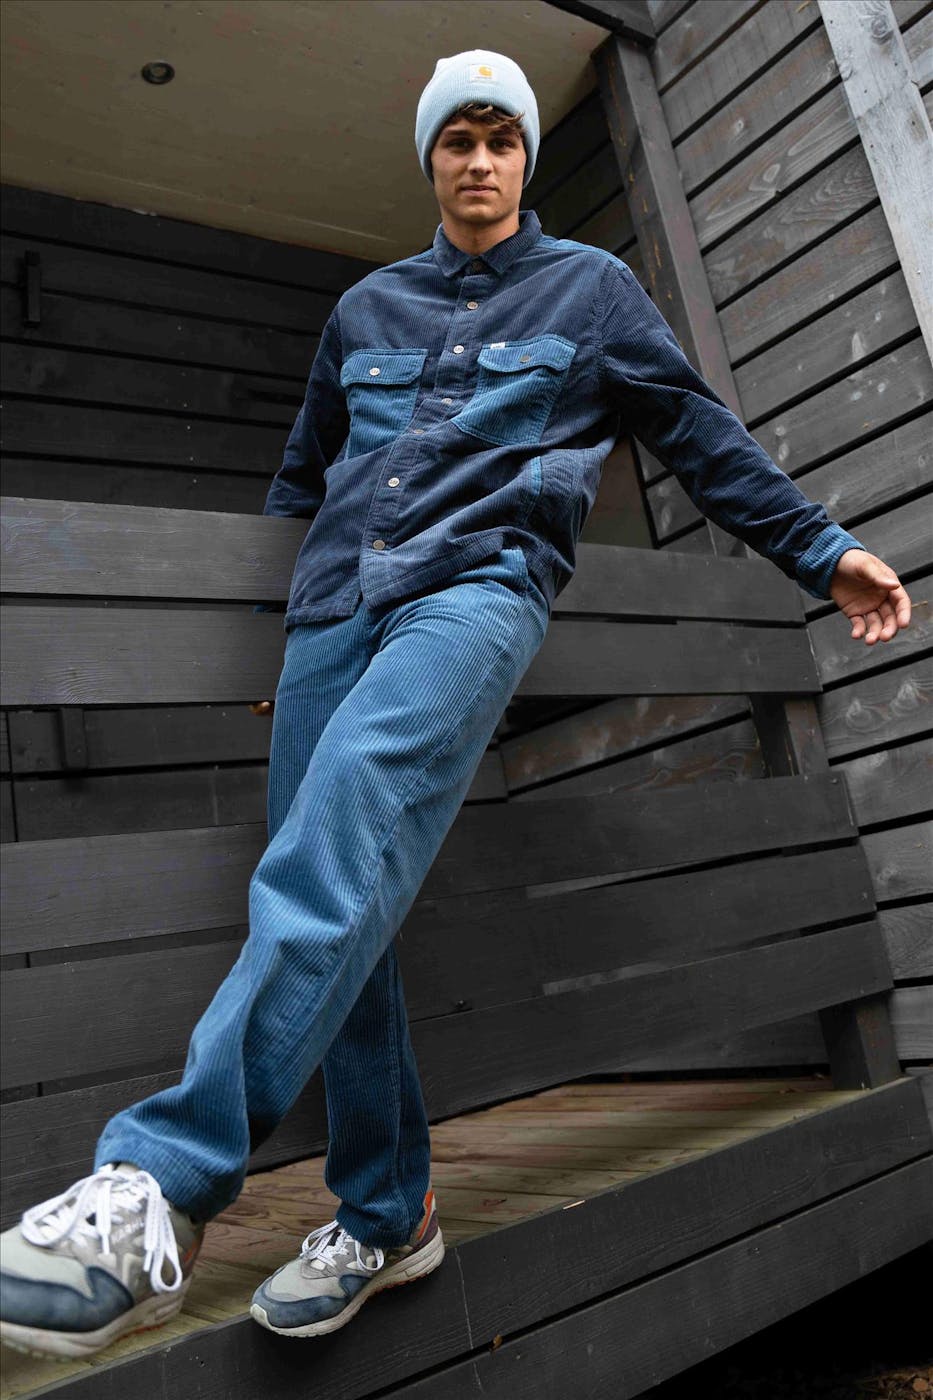 Lee - Blauwe Workwear overshirt